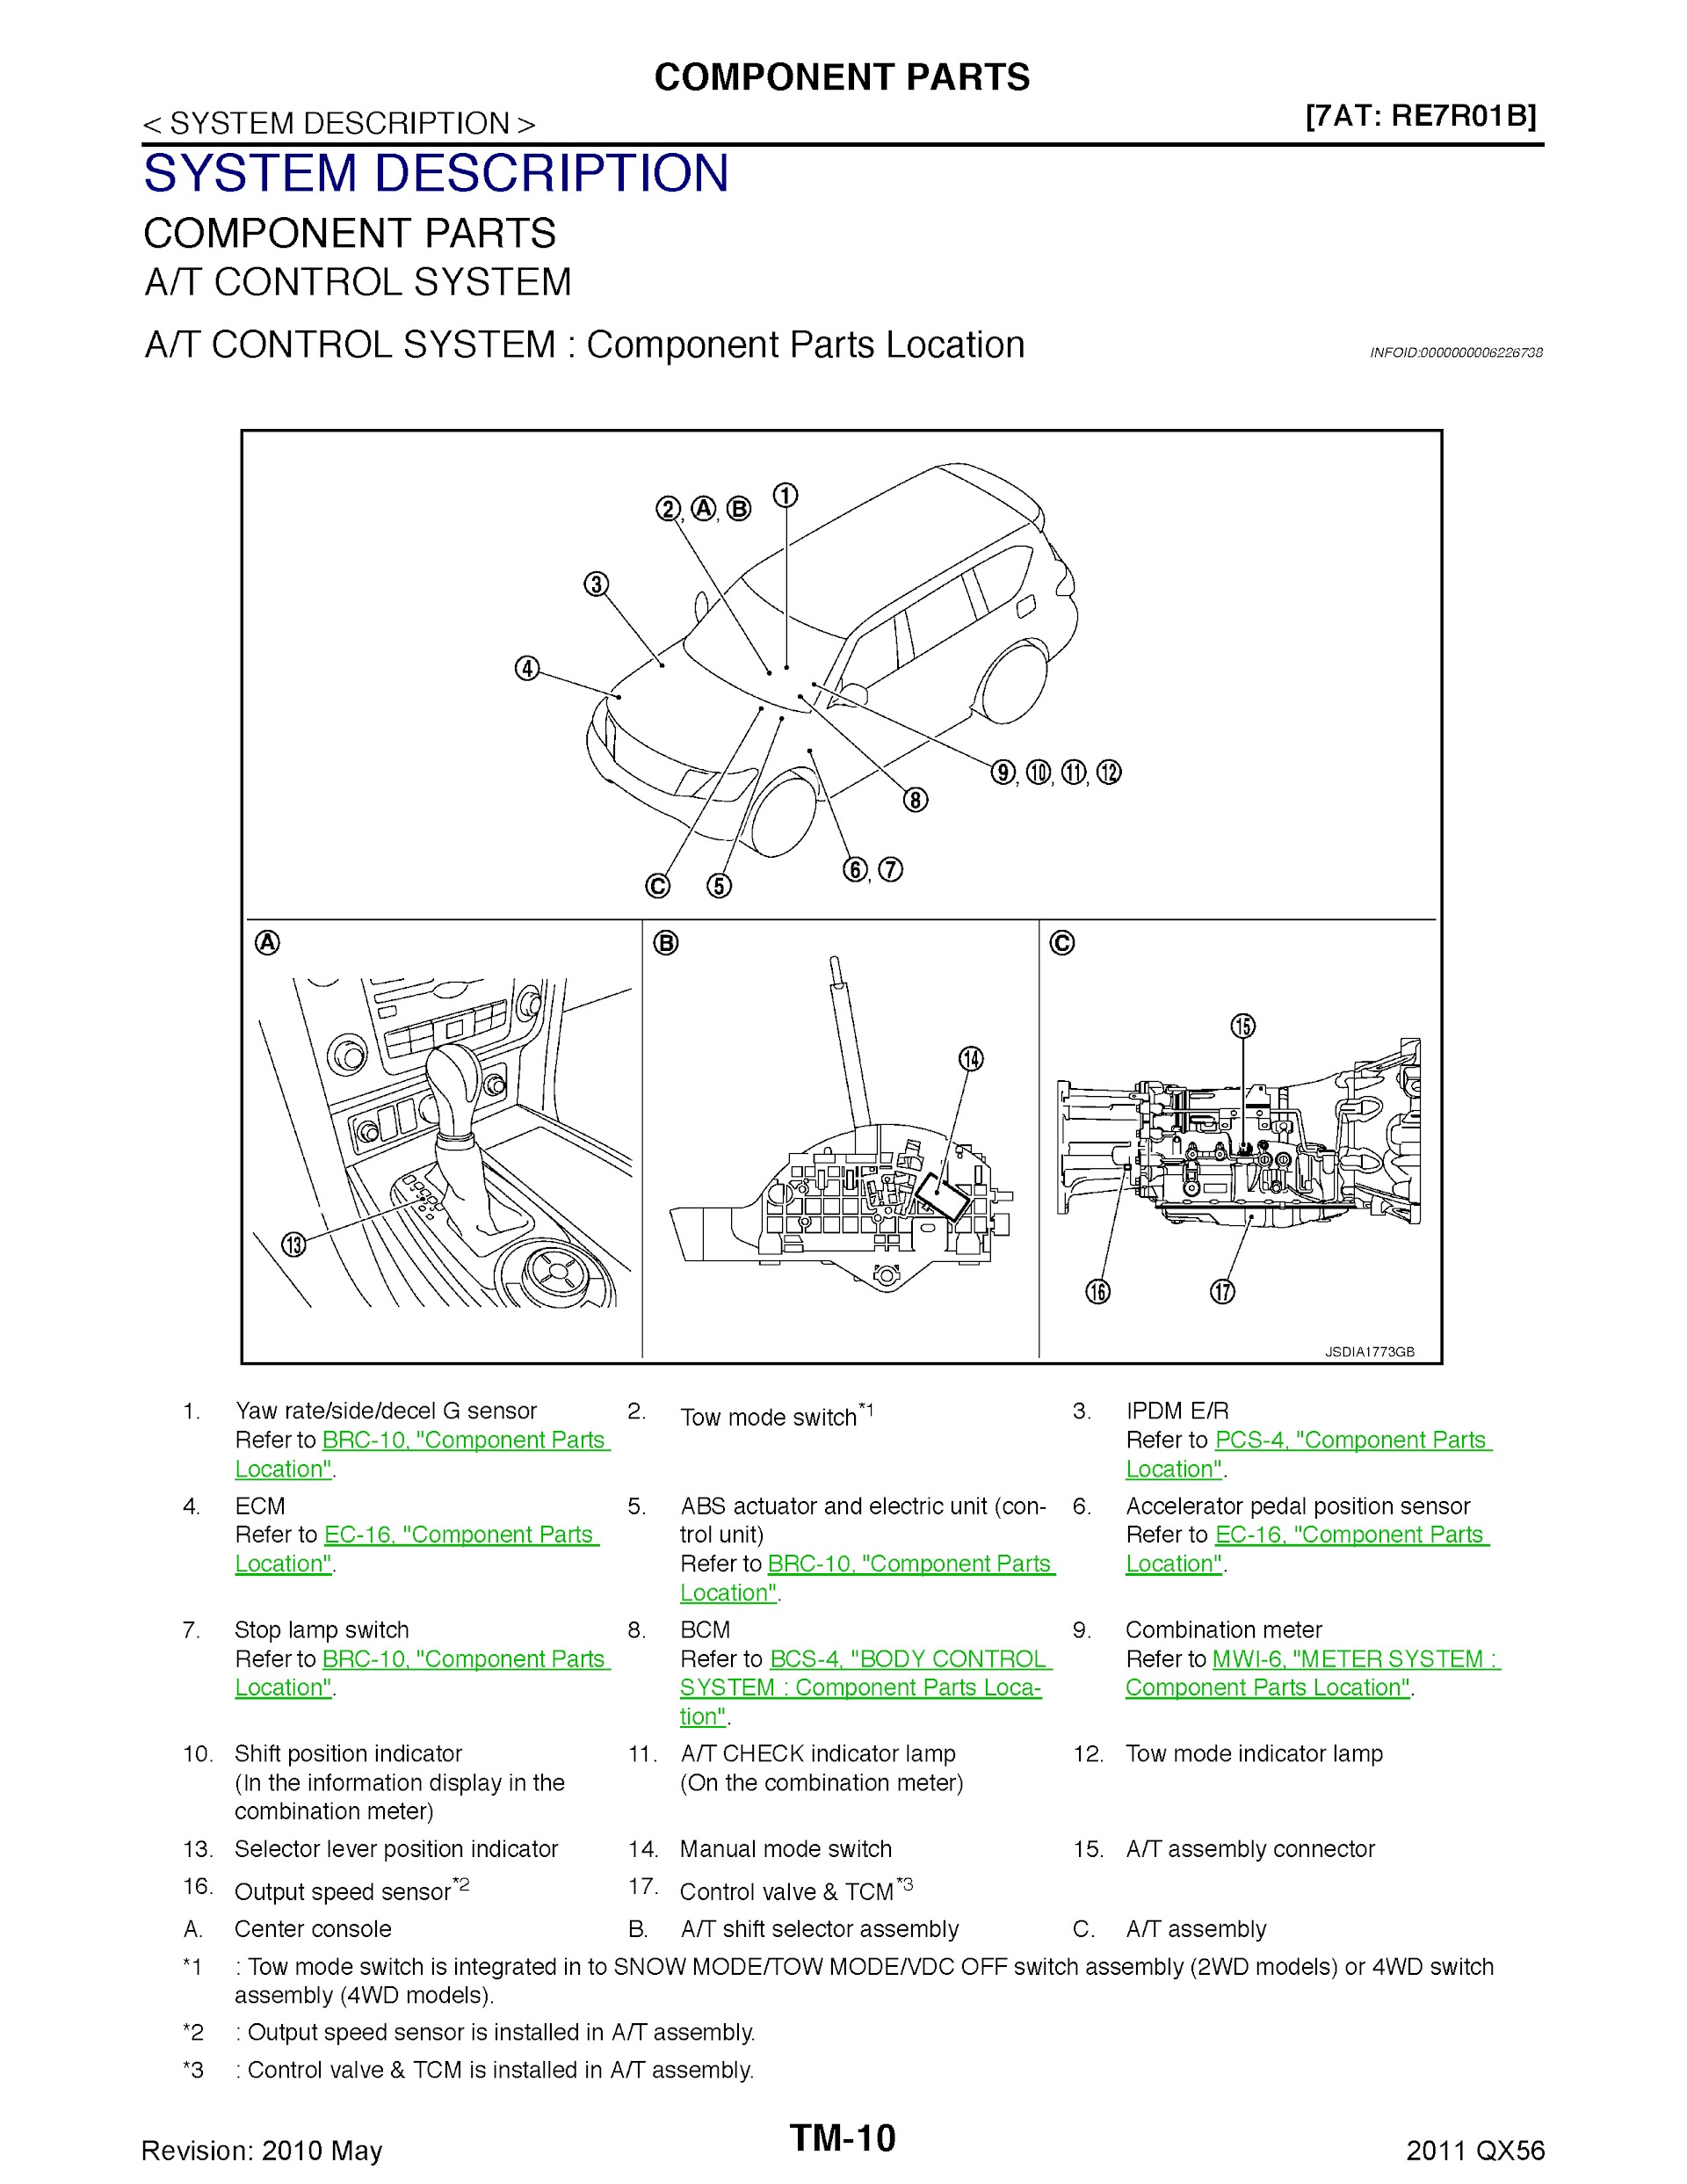 2011 Infiniti QX56 Repair Manual, A/T Control System